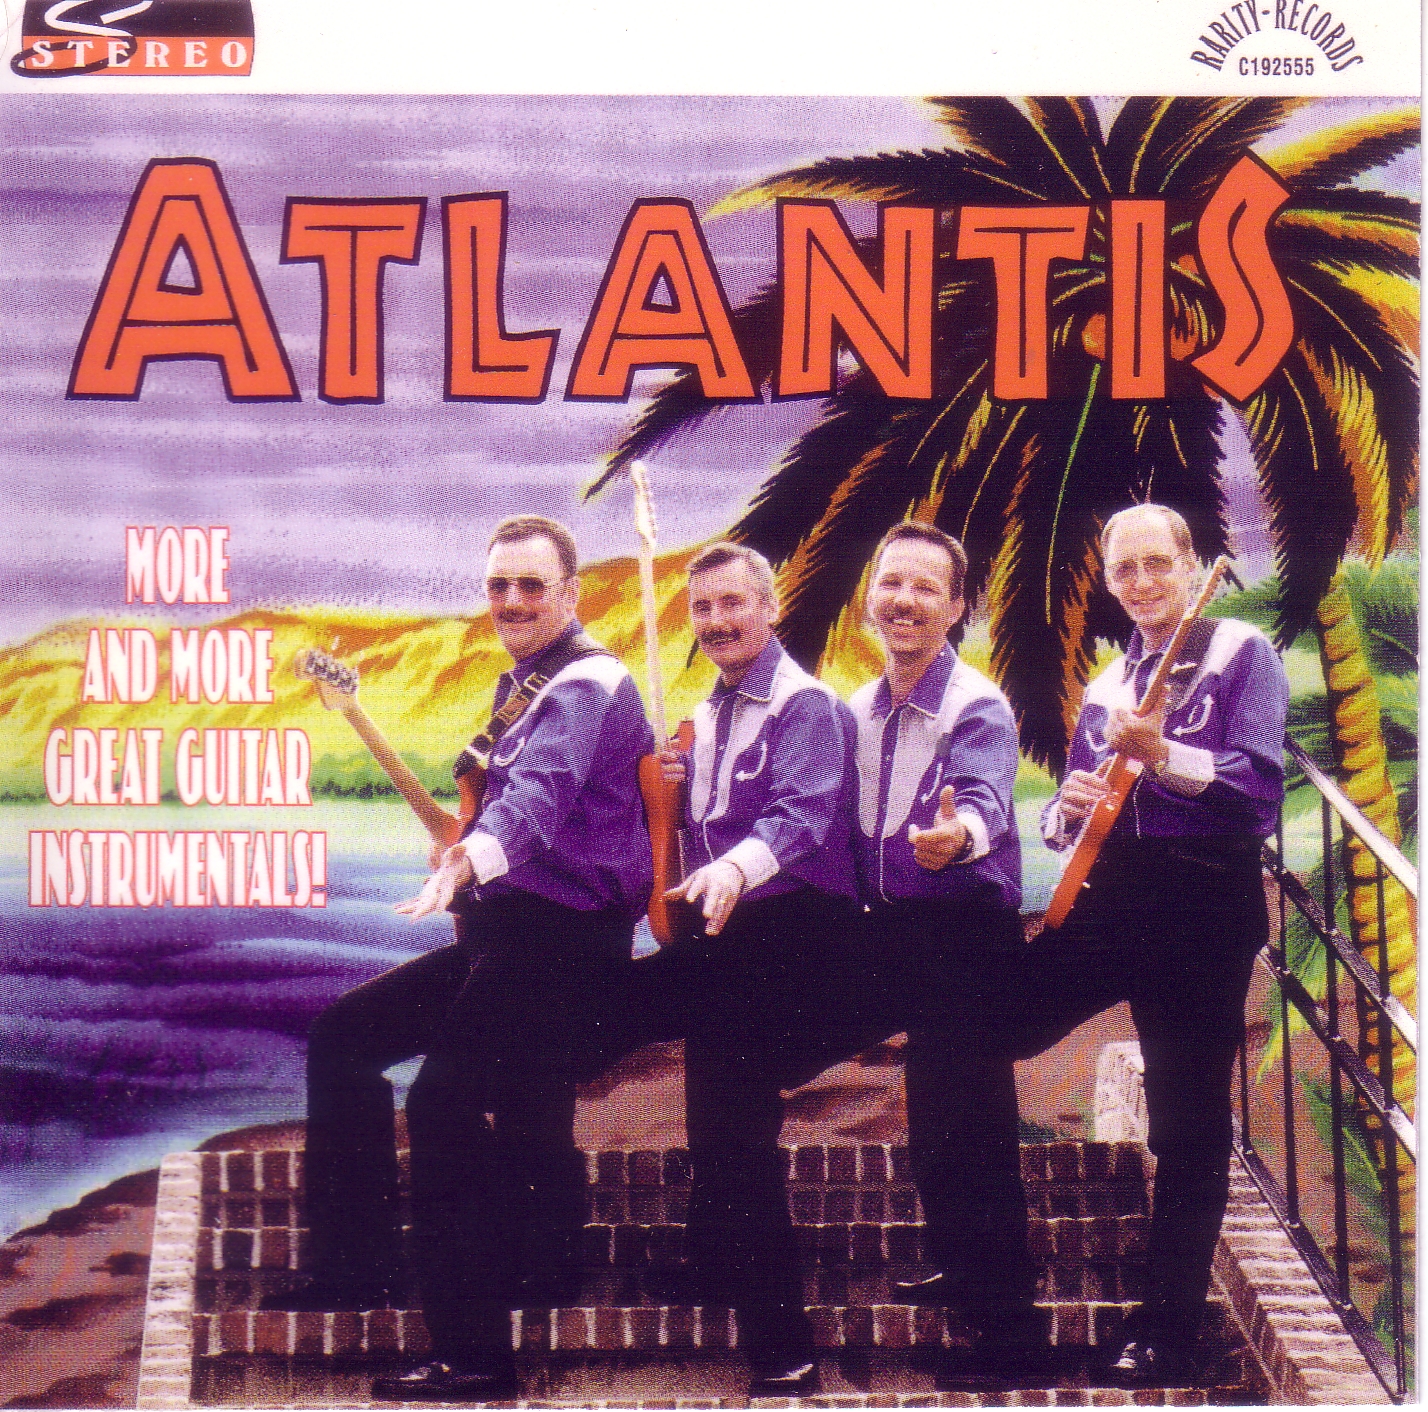 Atlantis vol 3 - More And More Great Guitar Instrumentals